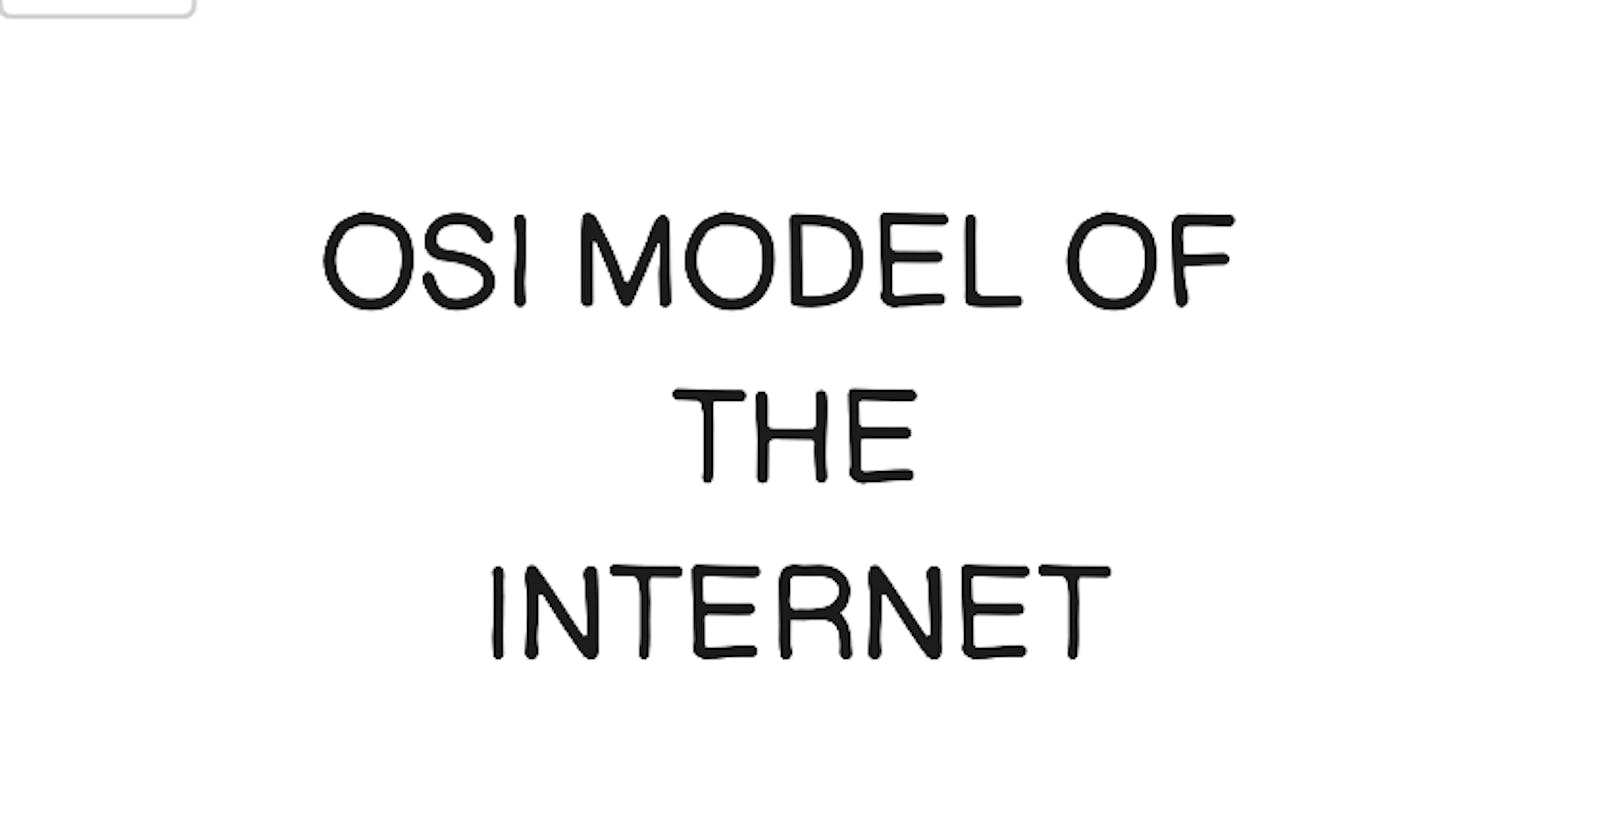 OSI Model